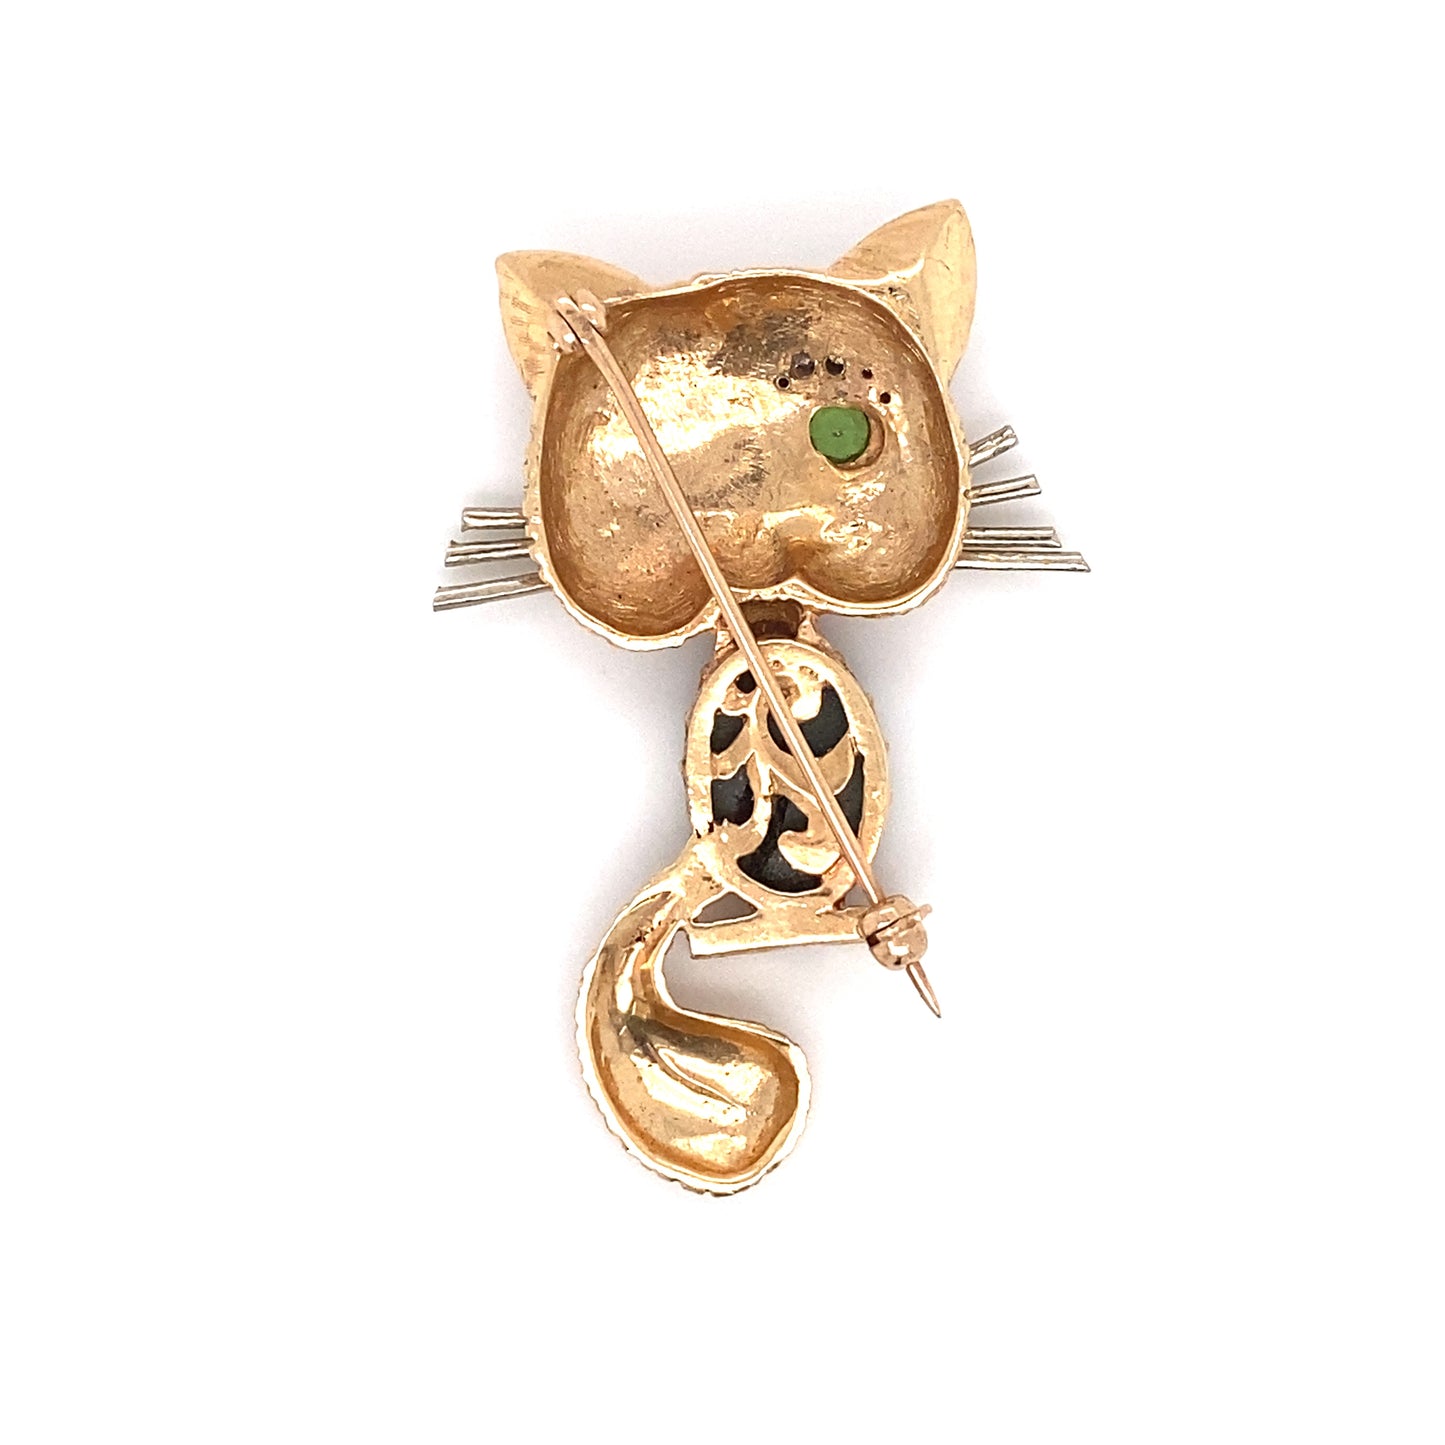 Circa 1960s Star Sapphire, Peridot and Diamond Winking Cat Brooch in 14K Gold